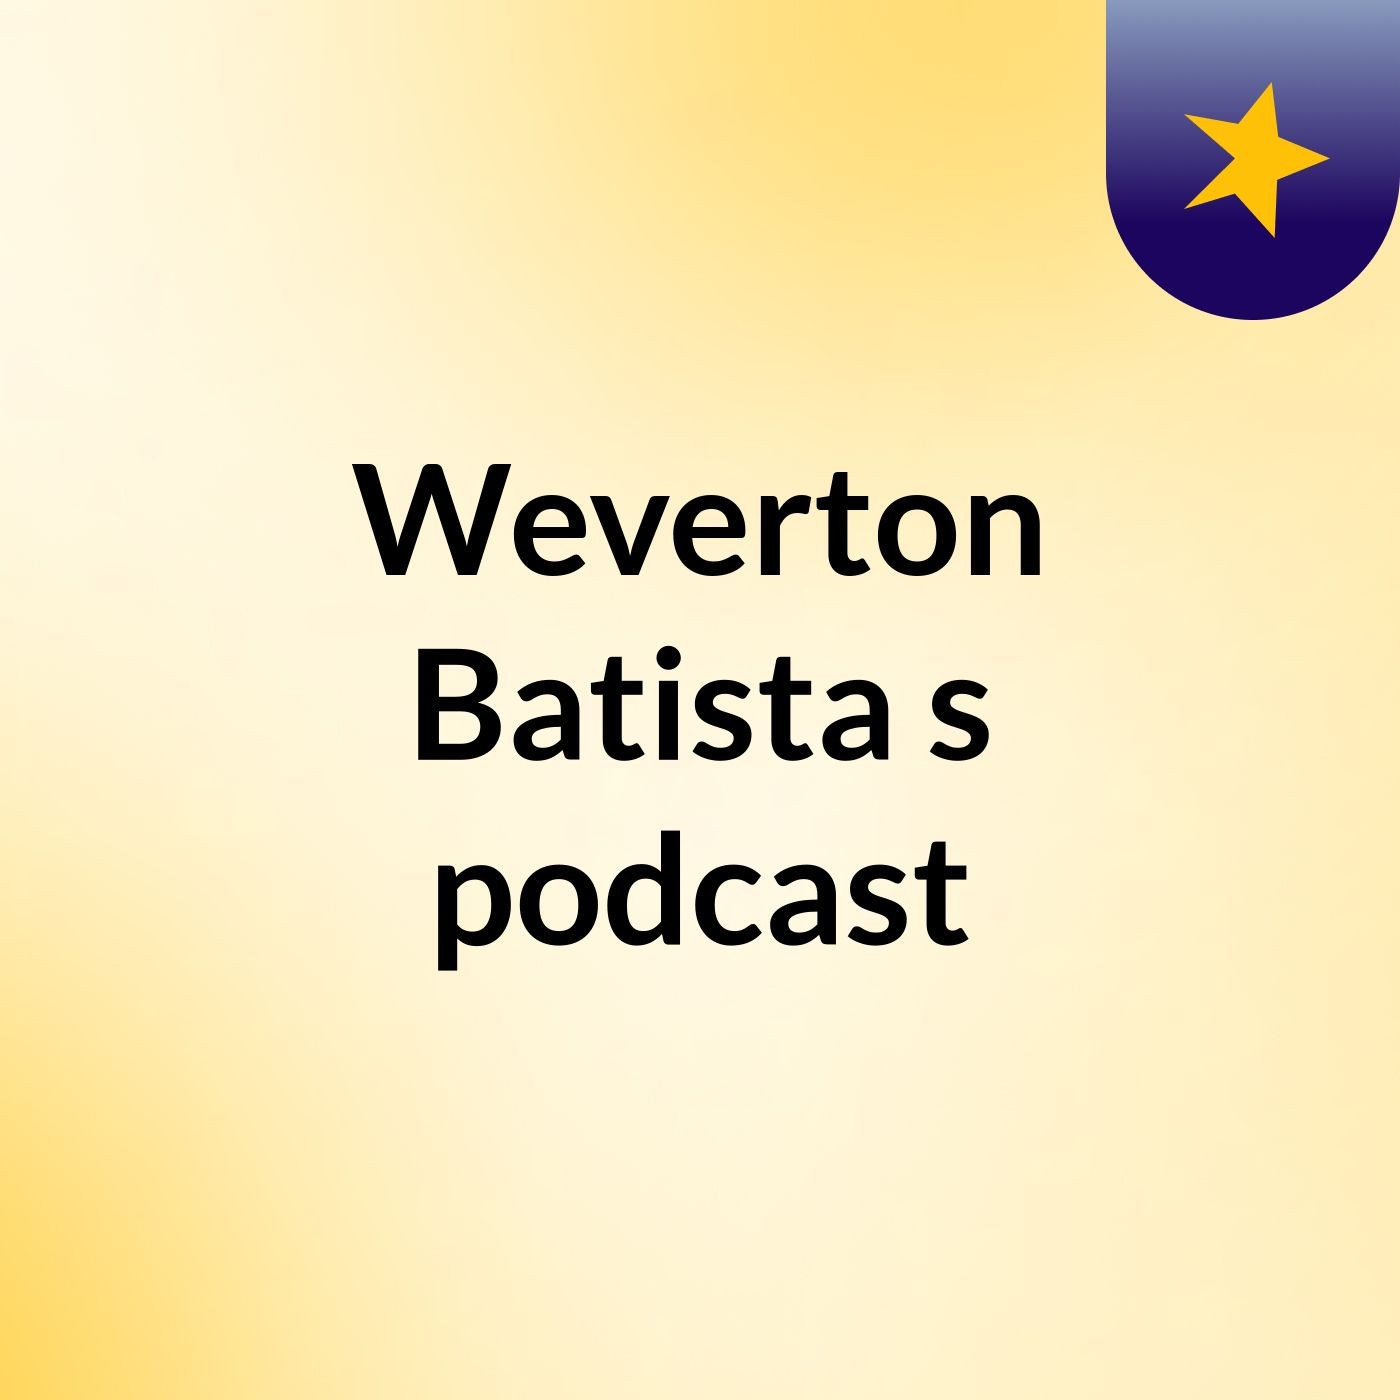 Weverton Batista's podcast